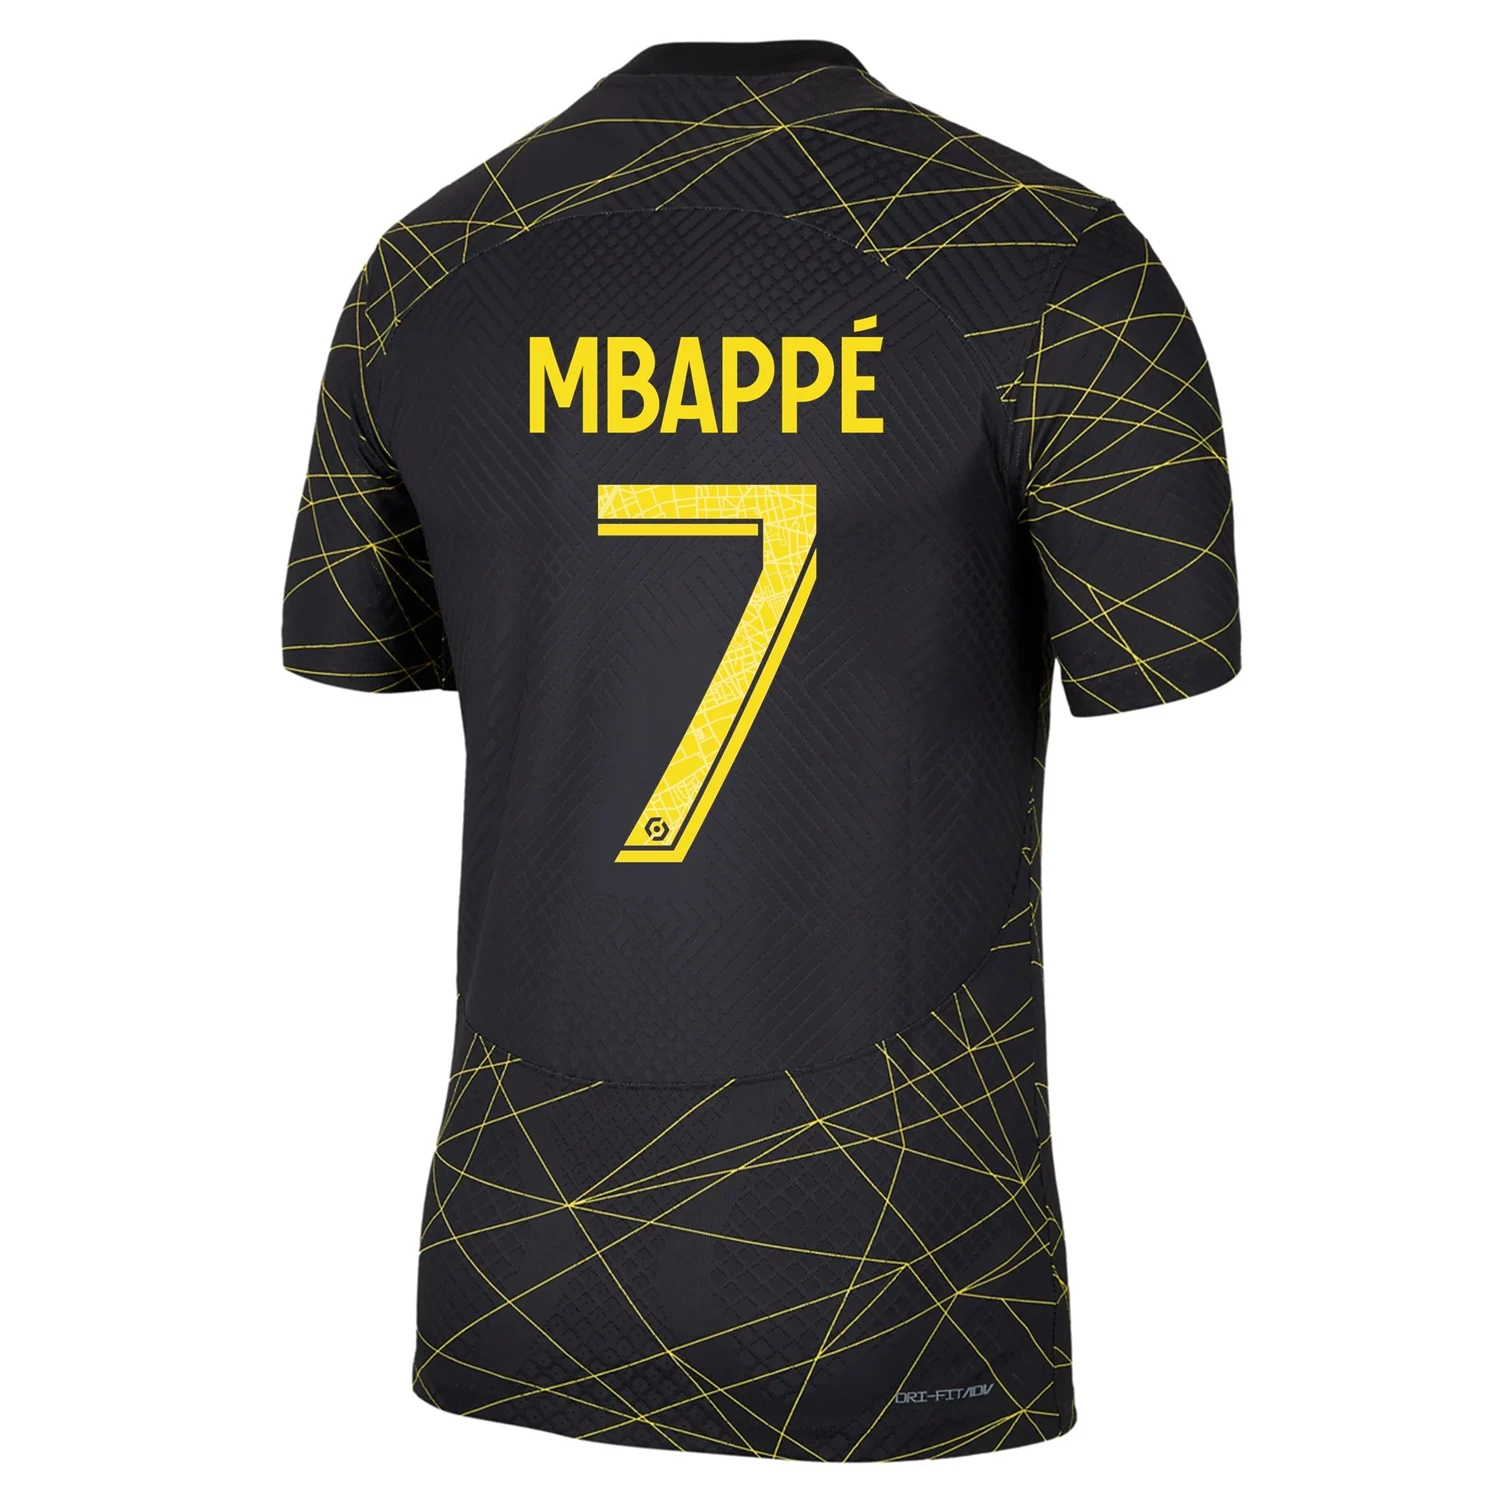 mbappe soccer player jersey